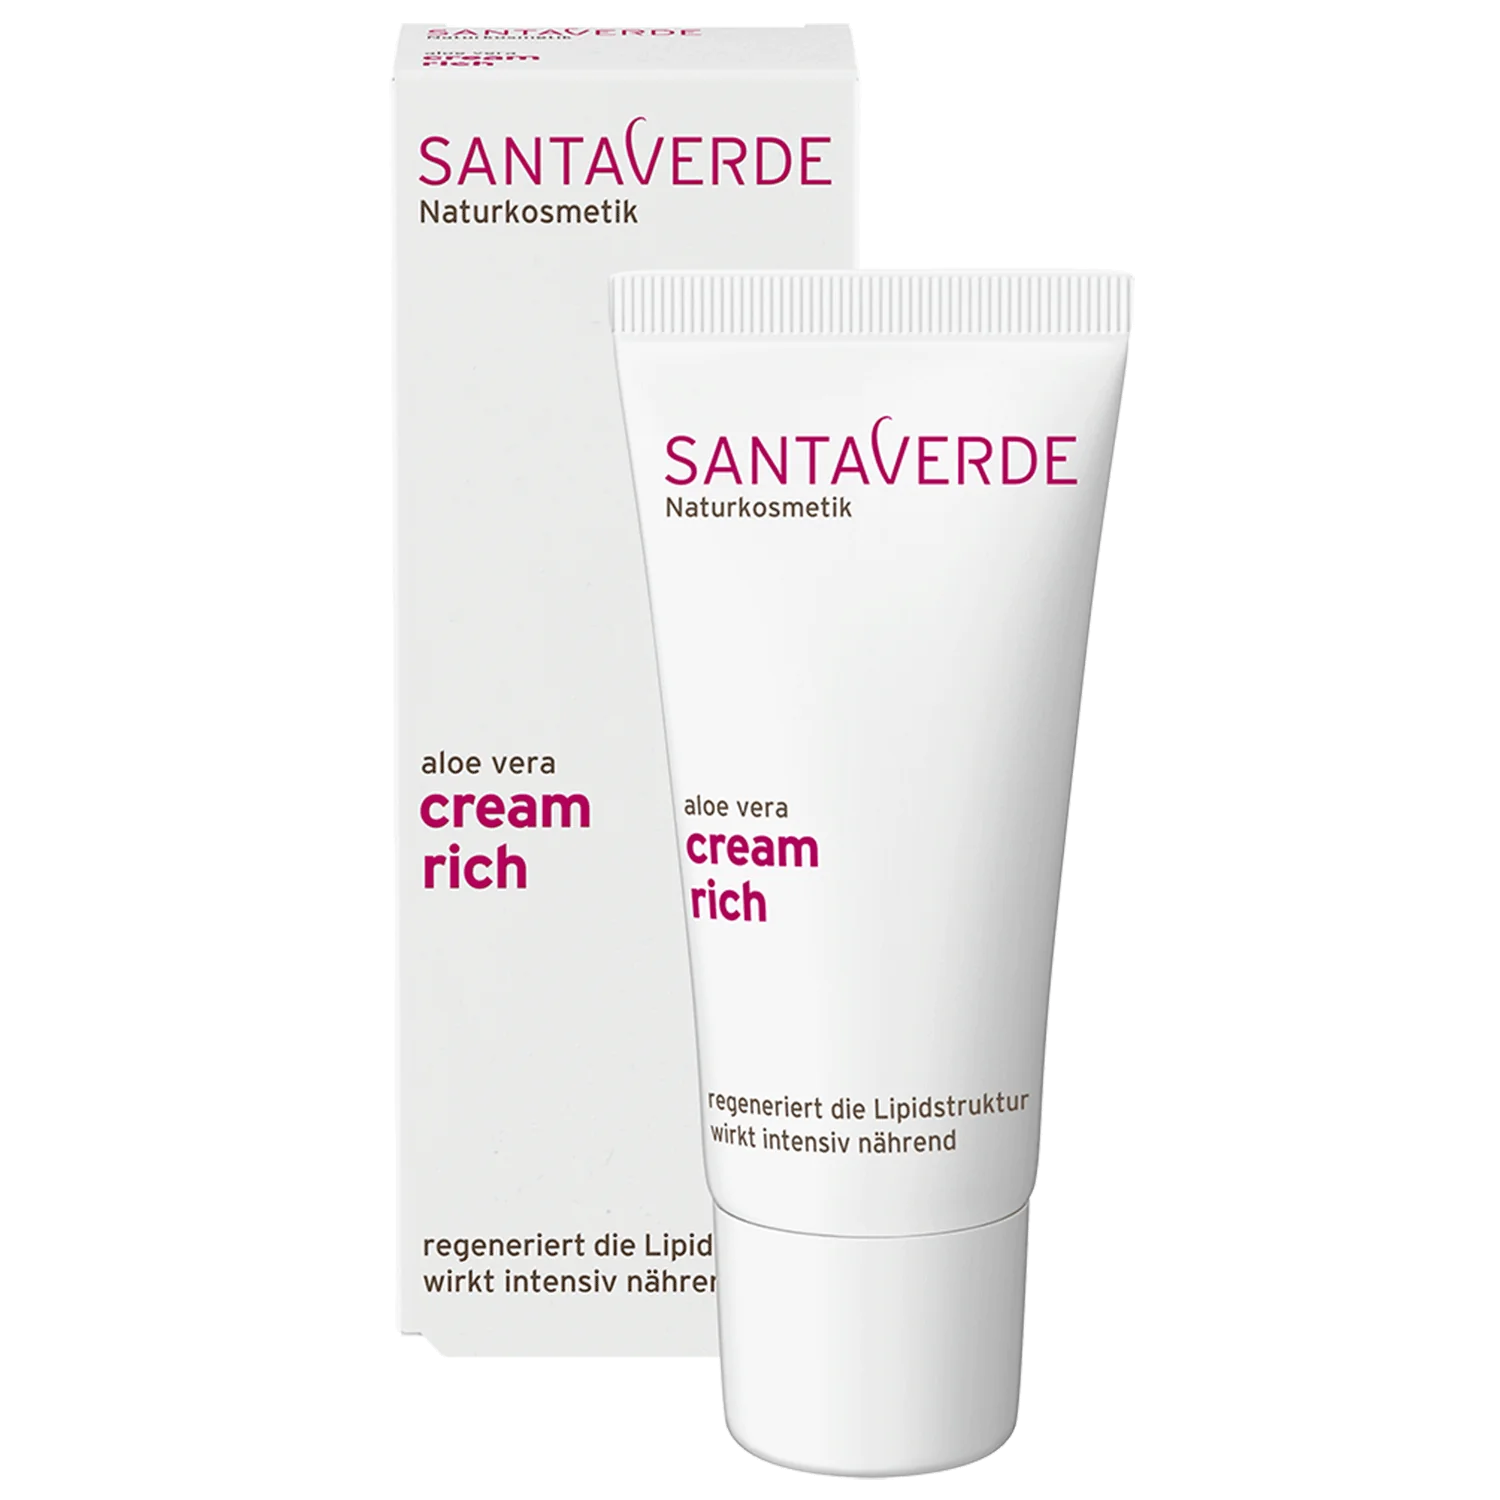 Santaverde cream rich | 30ml | Aloe Vera